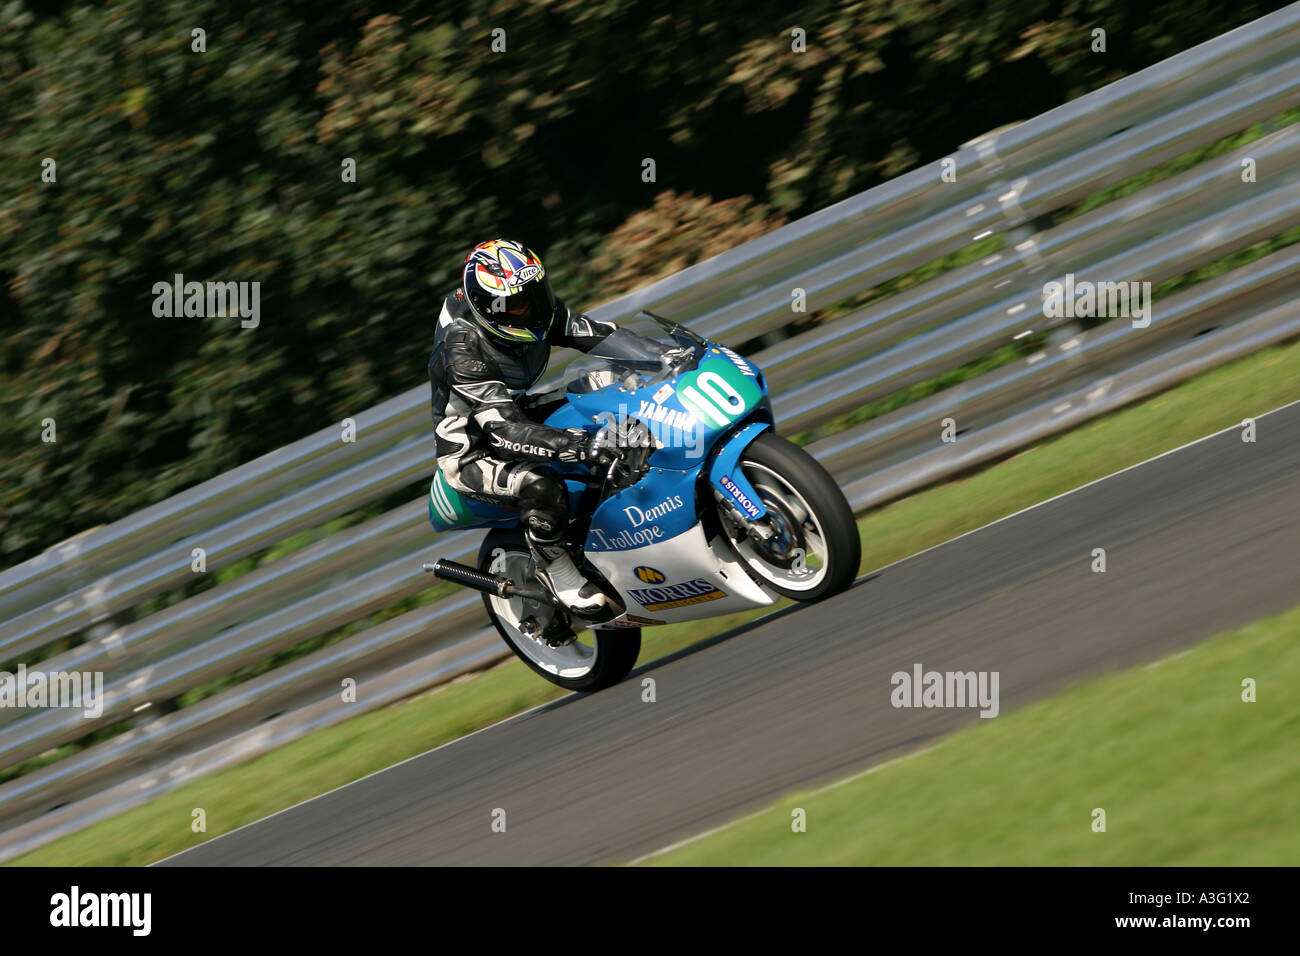 Motorcycle racing at Oulton Park, UK. Stock Photo